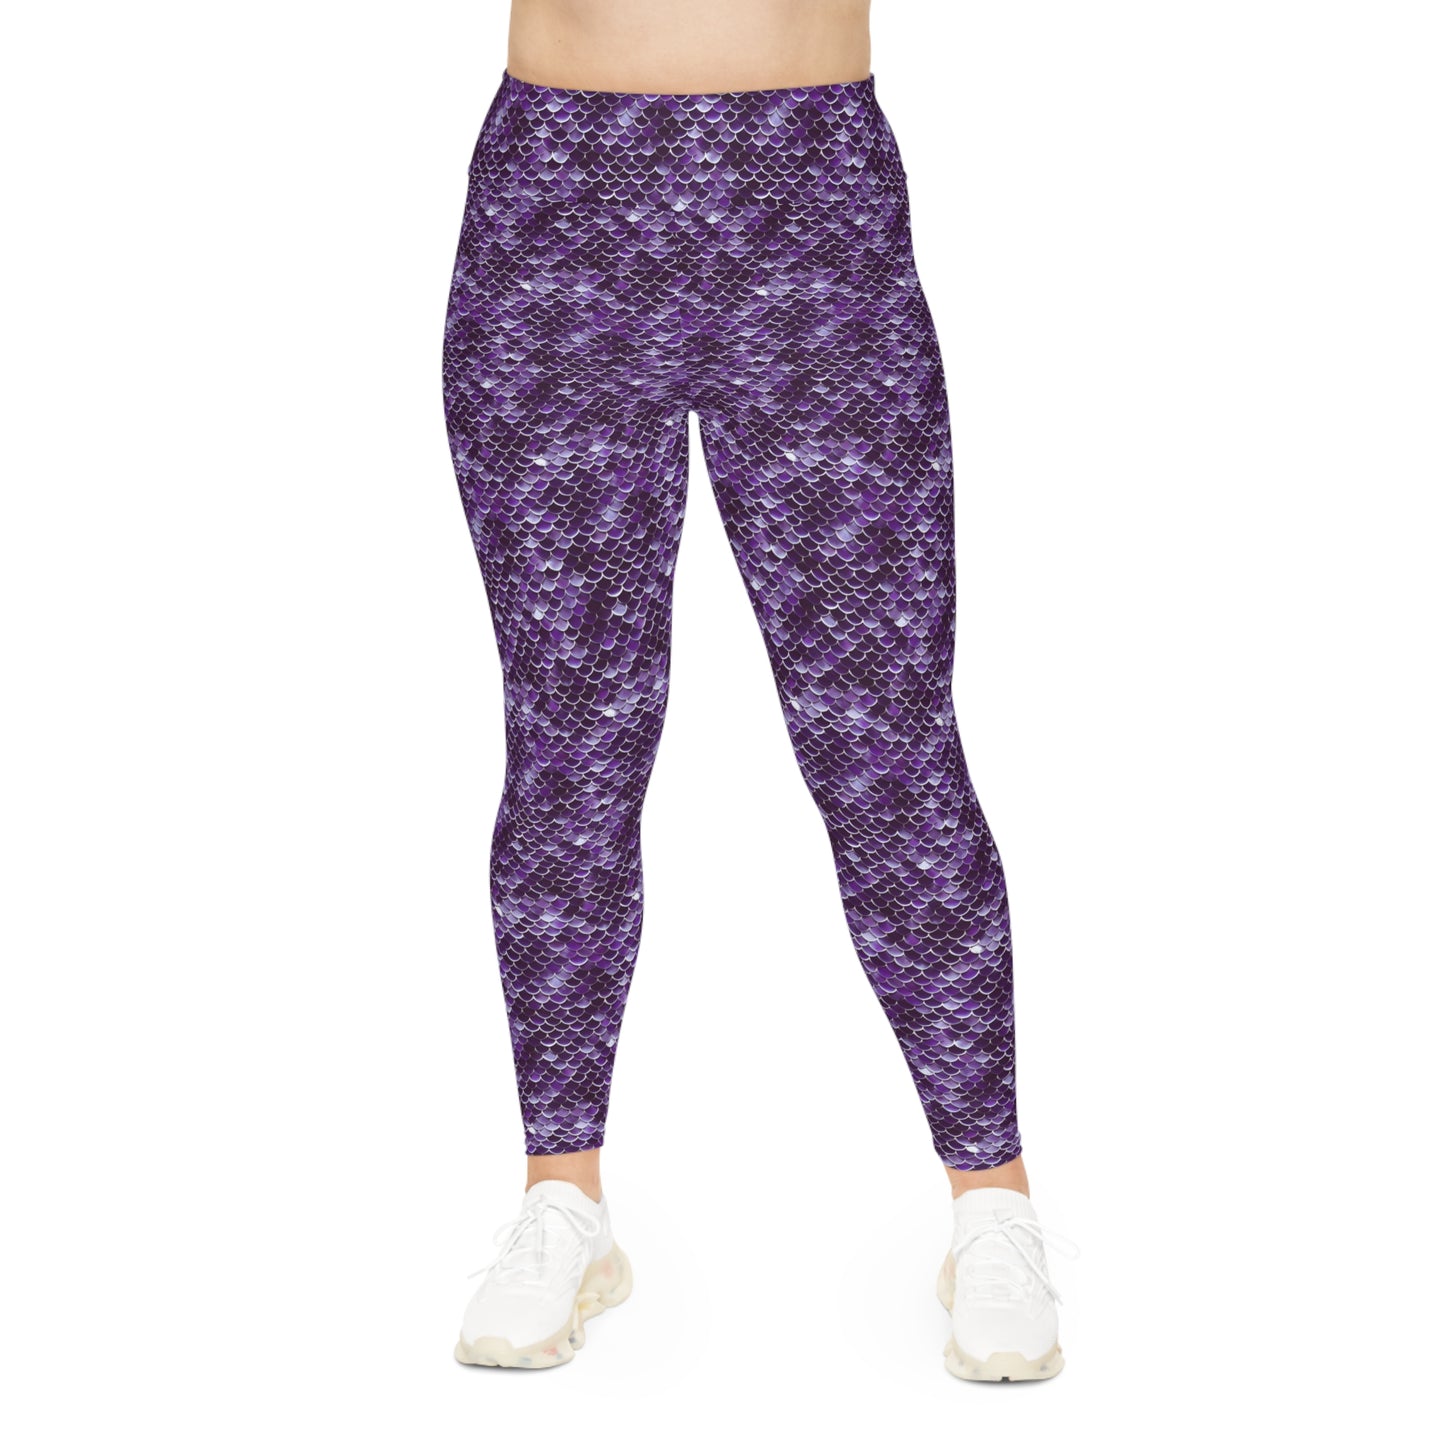 Plus Size Yoga Leggings Purple Mermaid Style Ocean Inspired Design 4-Way Stretch, High-Rise Waistband, UPF 50+, Gym, Workout, Athleticwear